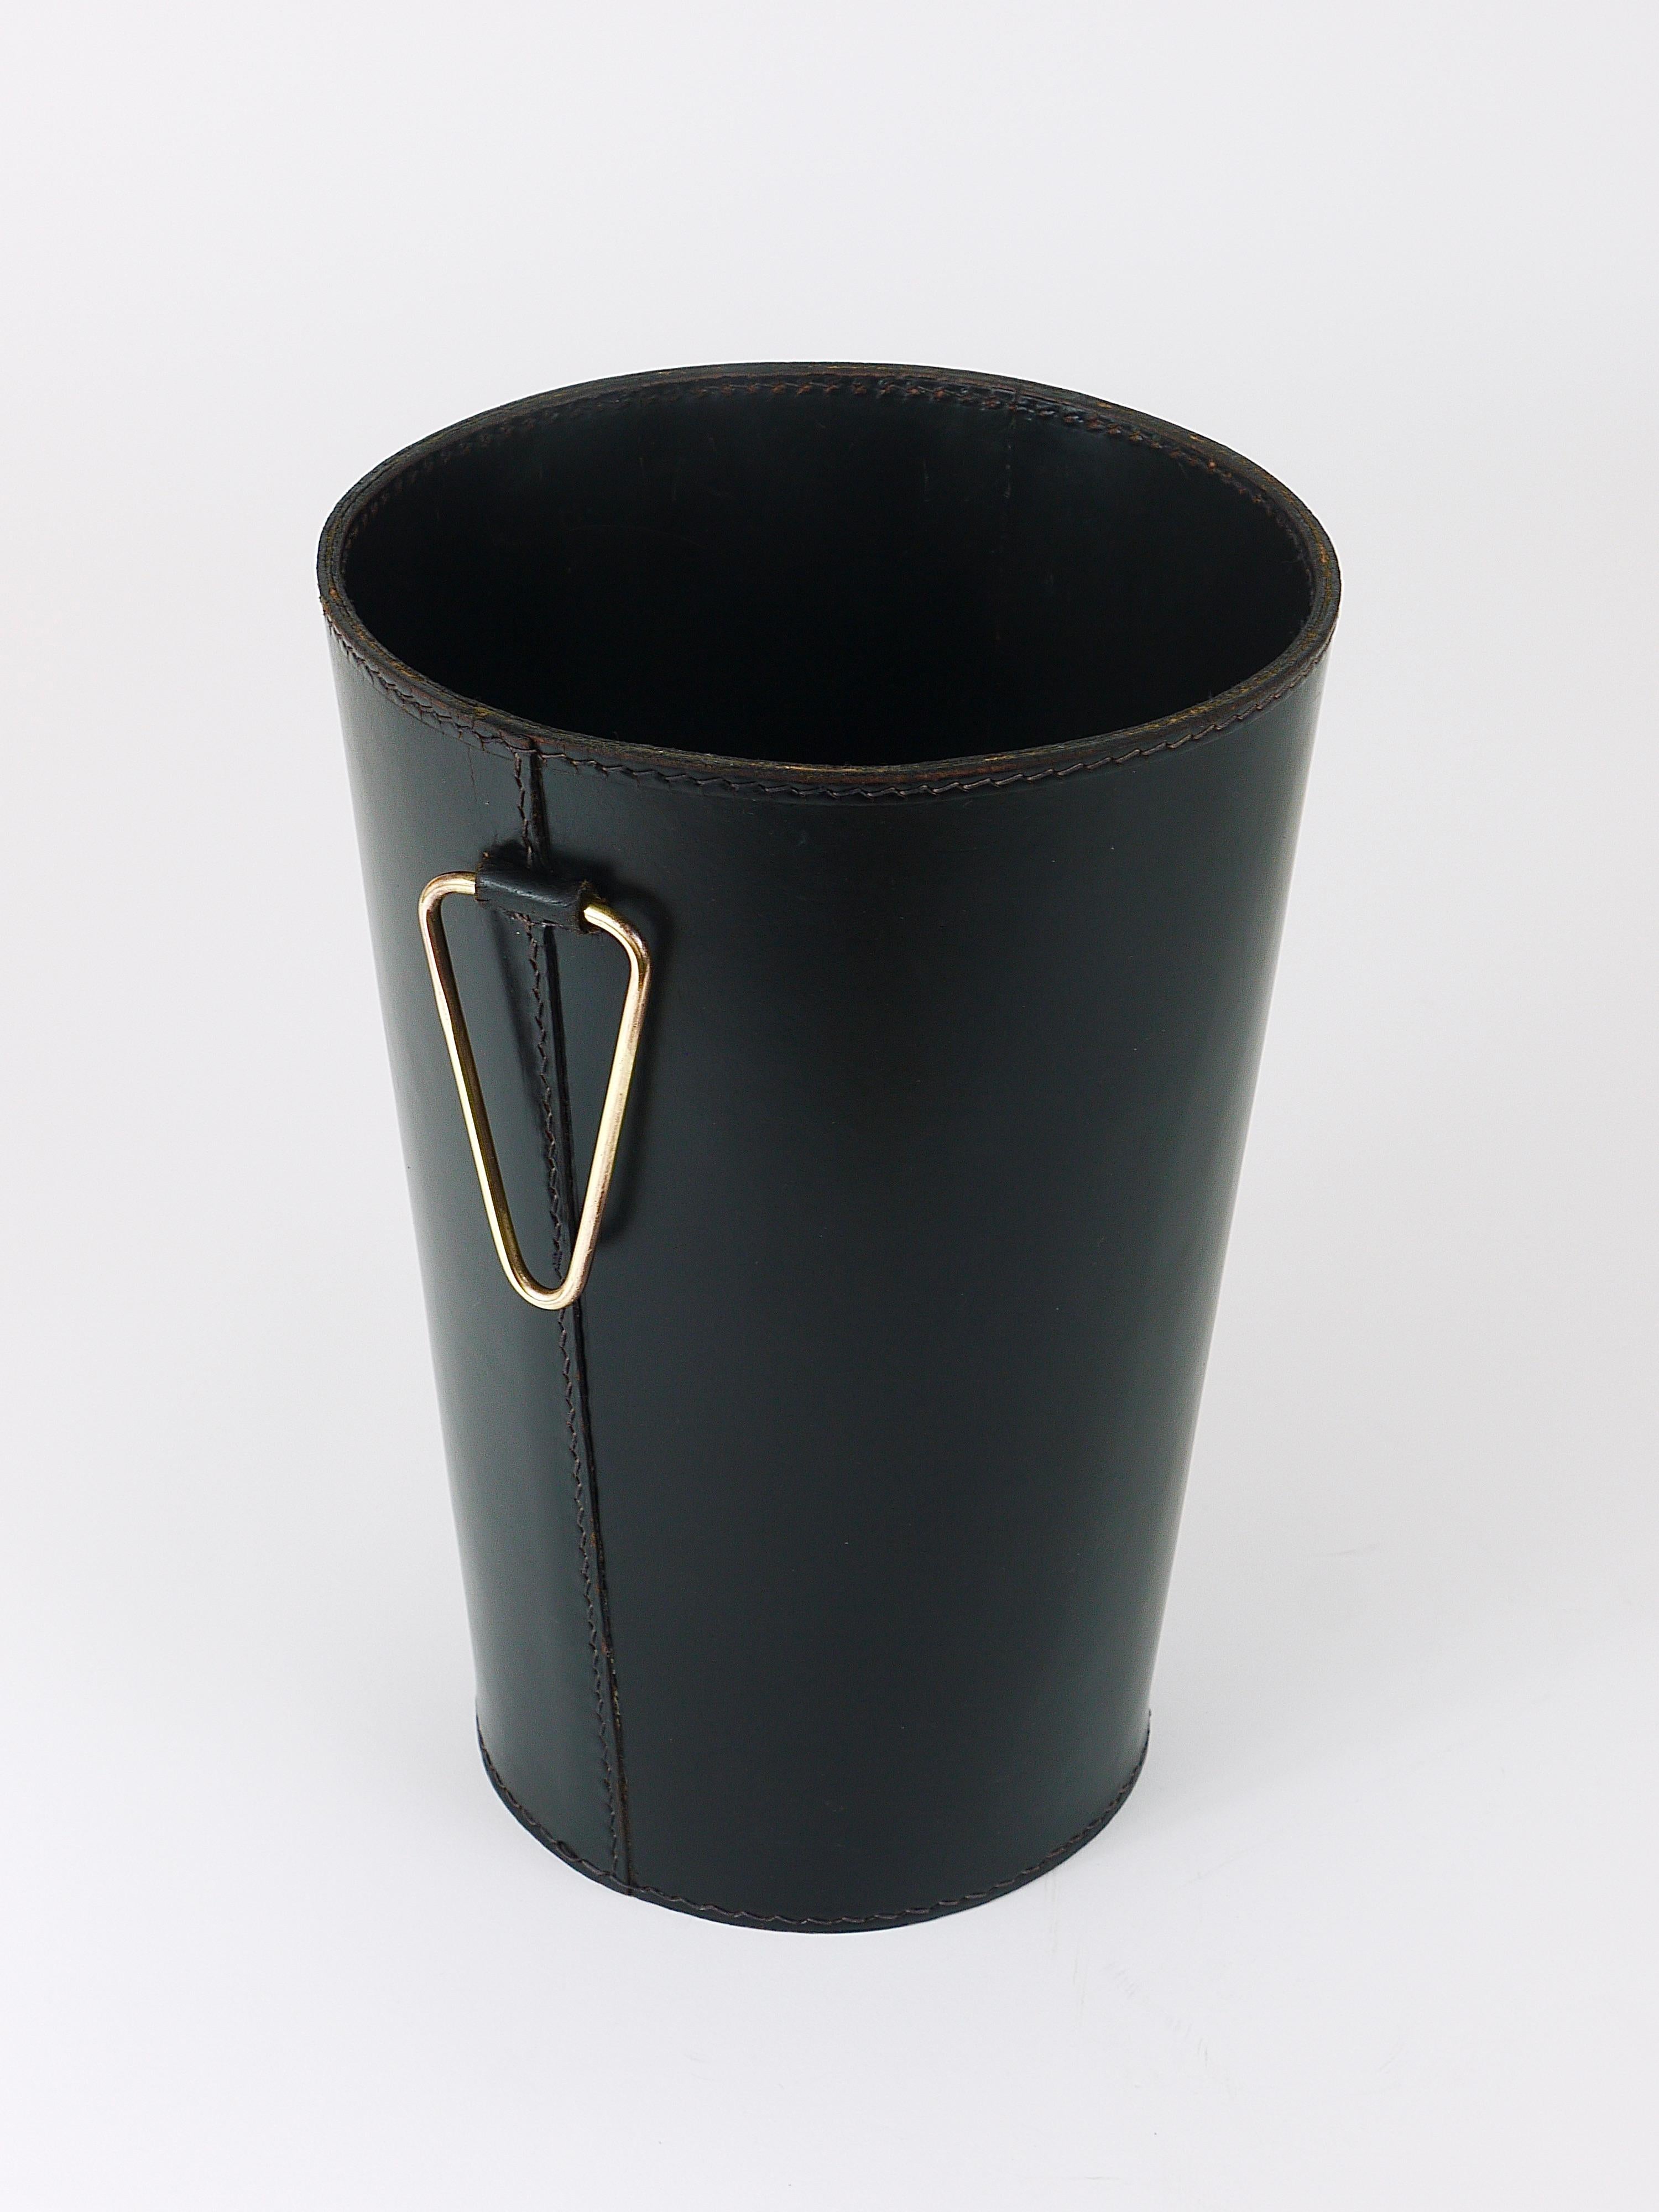 Mid-Century Carl Auböck Black Leather & Brass Wastepaper Basket, Austria, 1950s For Sale 4